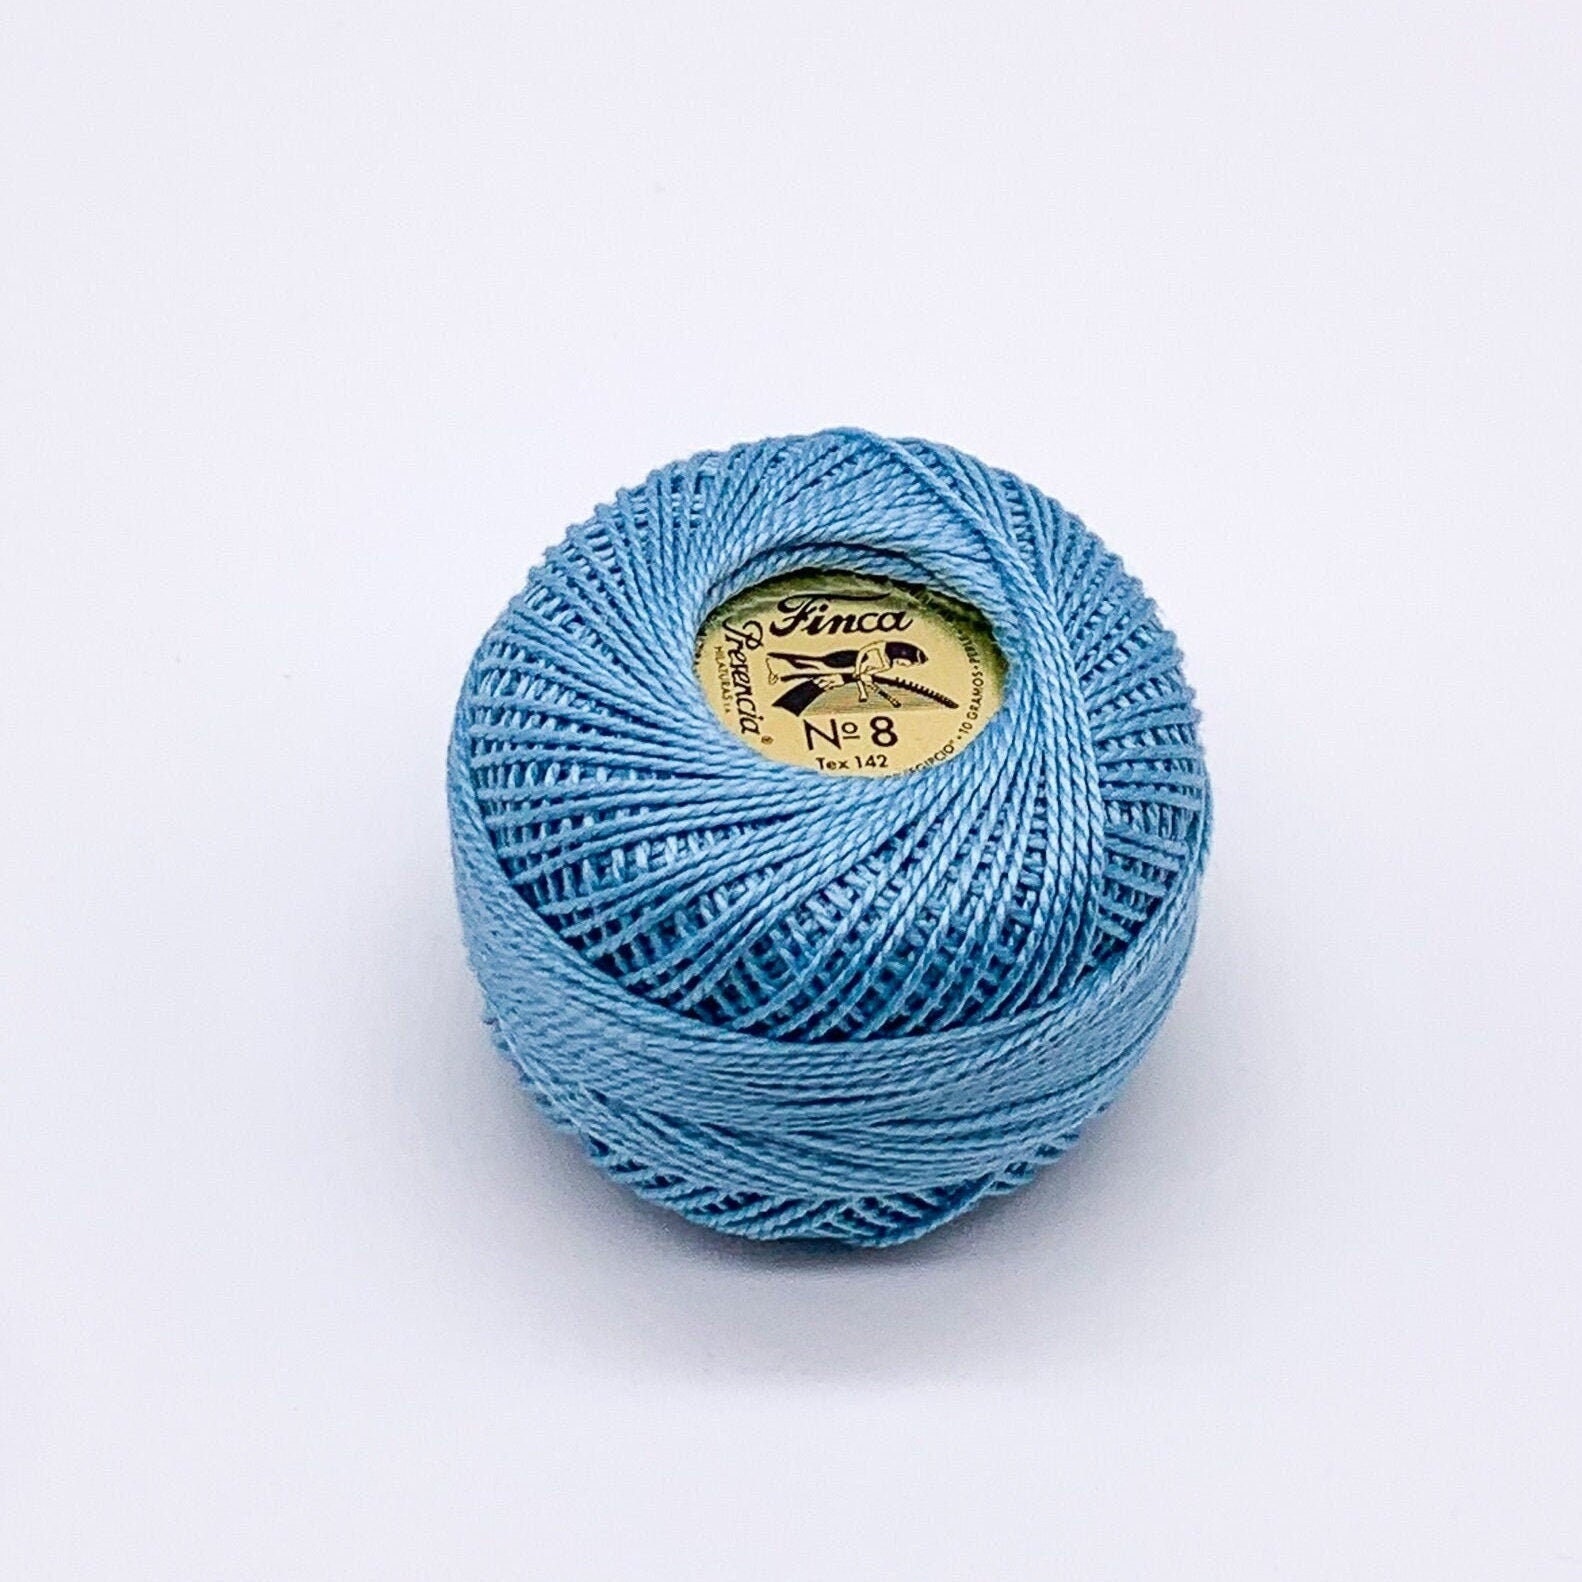 Turquoise Size 8 Sashiko Crochet Perle Cotton Thread Cross Stitch from Presencia Finca 3560 Pearl Thread for Embroidery Crewel